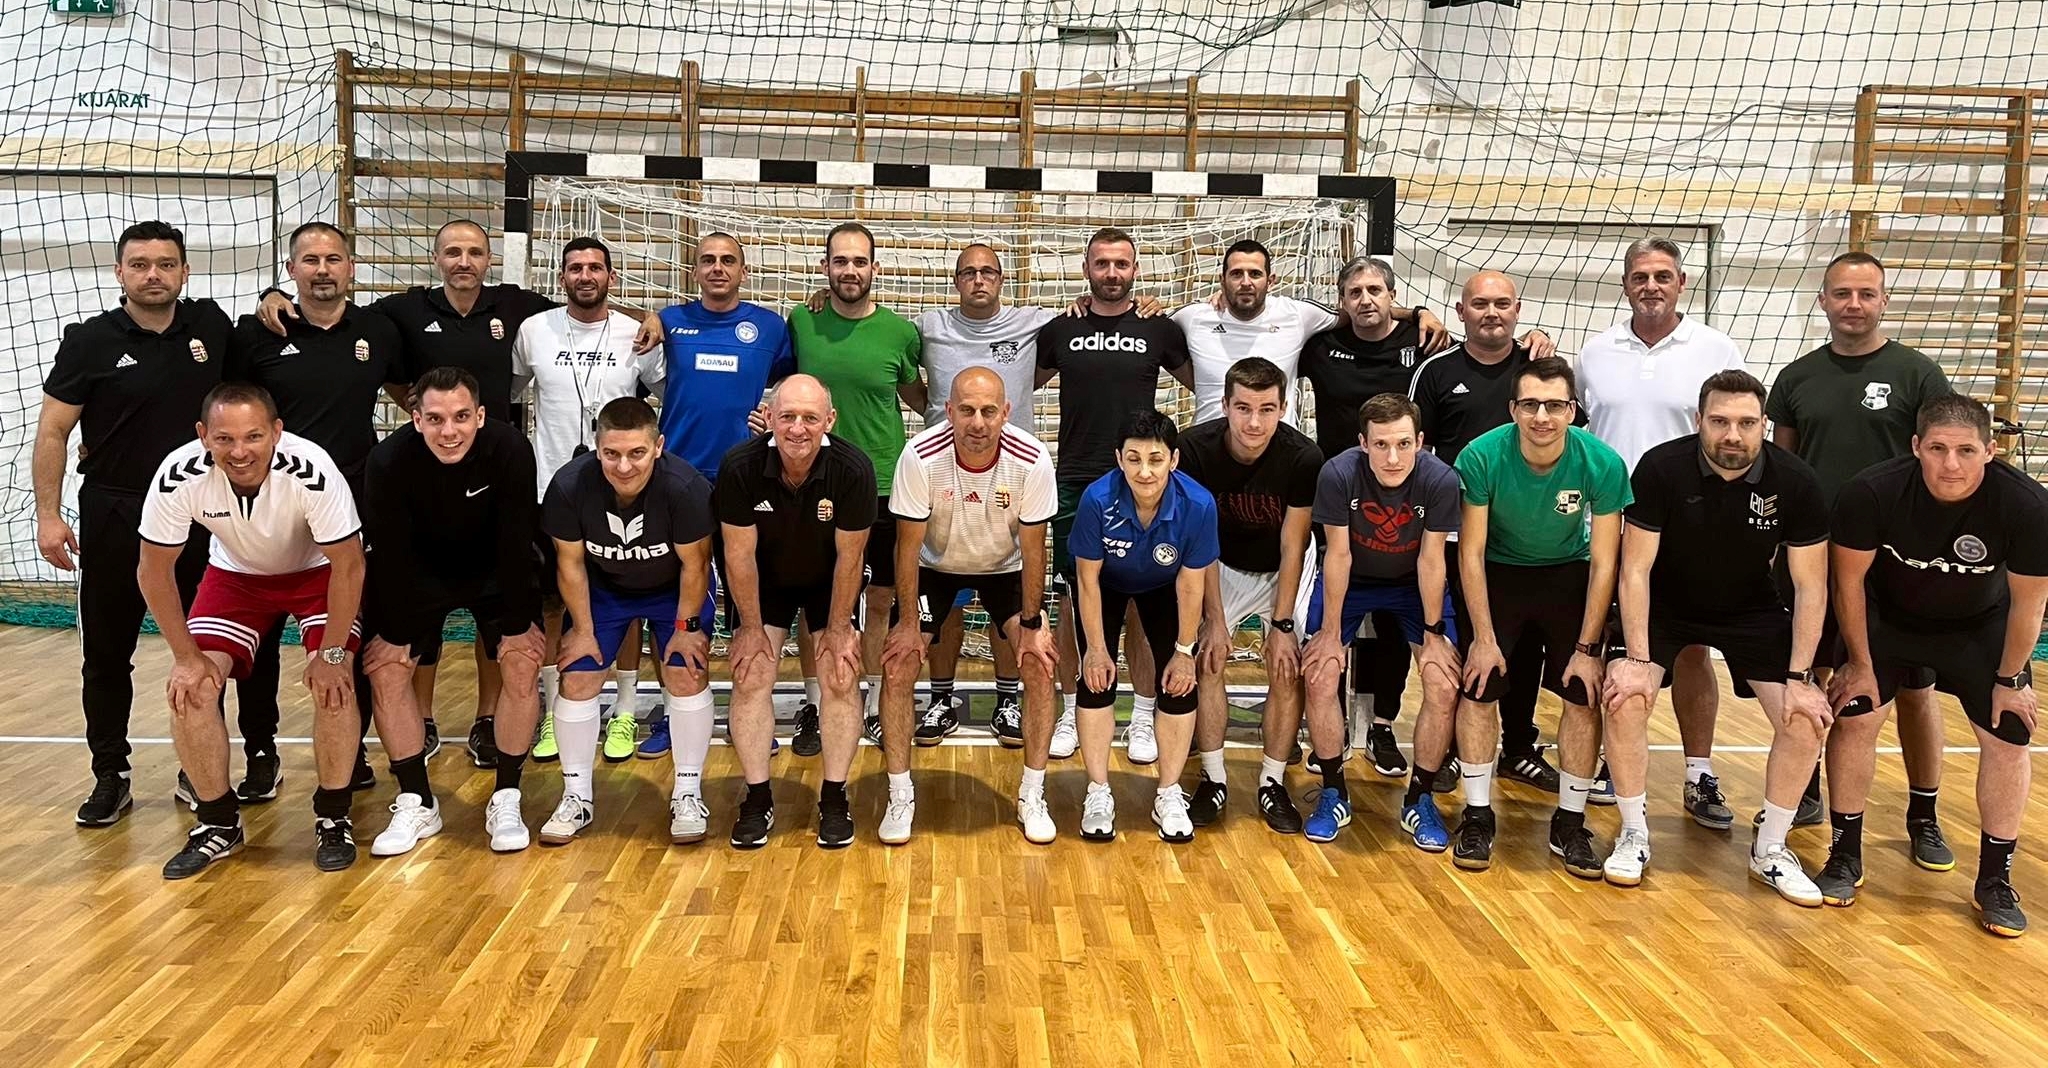 Véget értek a Futsal tanfolyamok Veszprémben